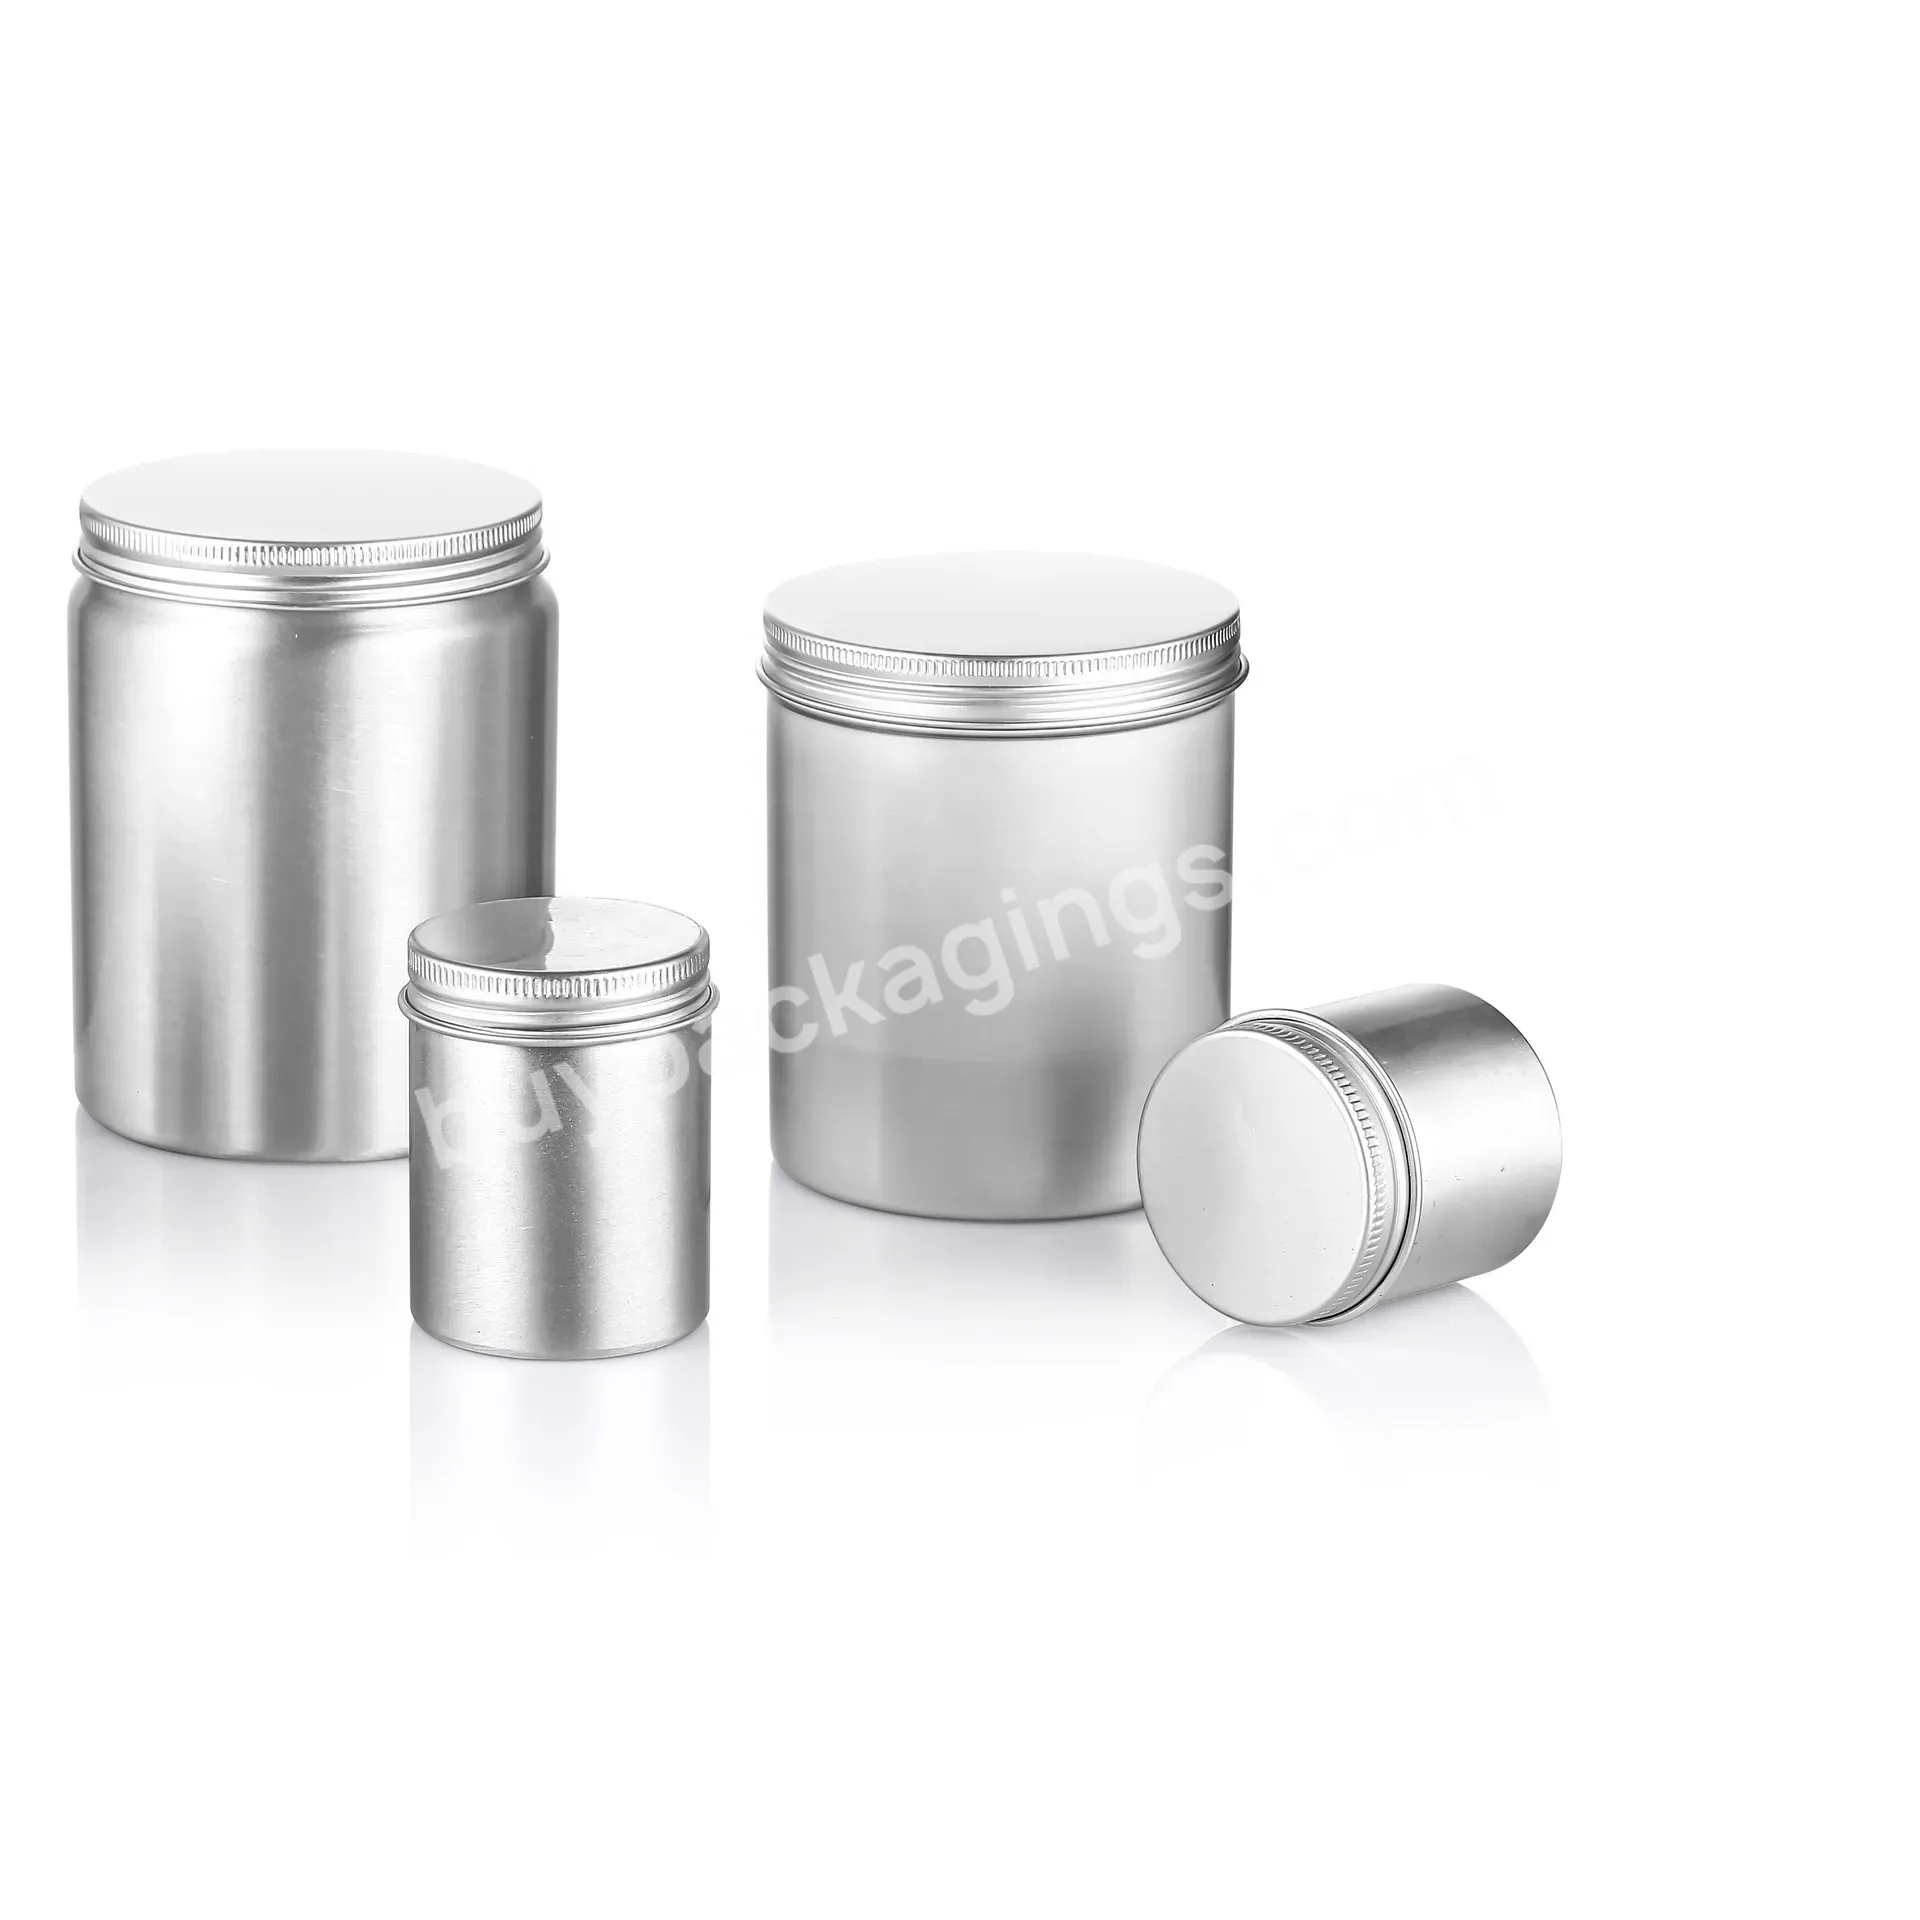 50g-2000g Metal Aluminum Container Jars For Tea Food Packaging